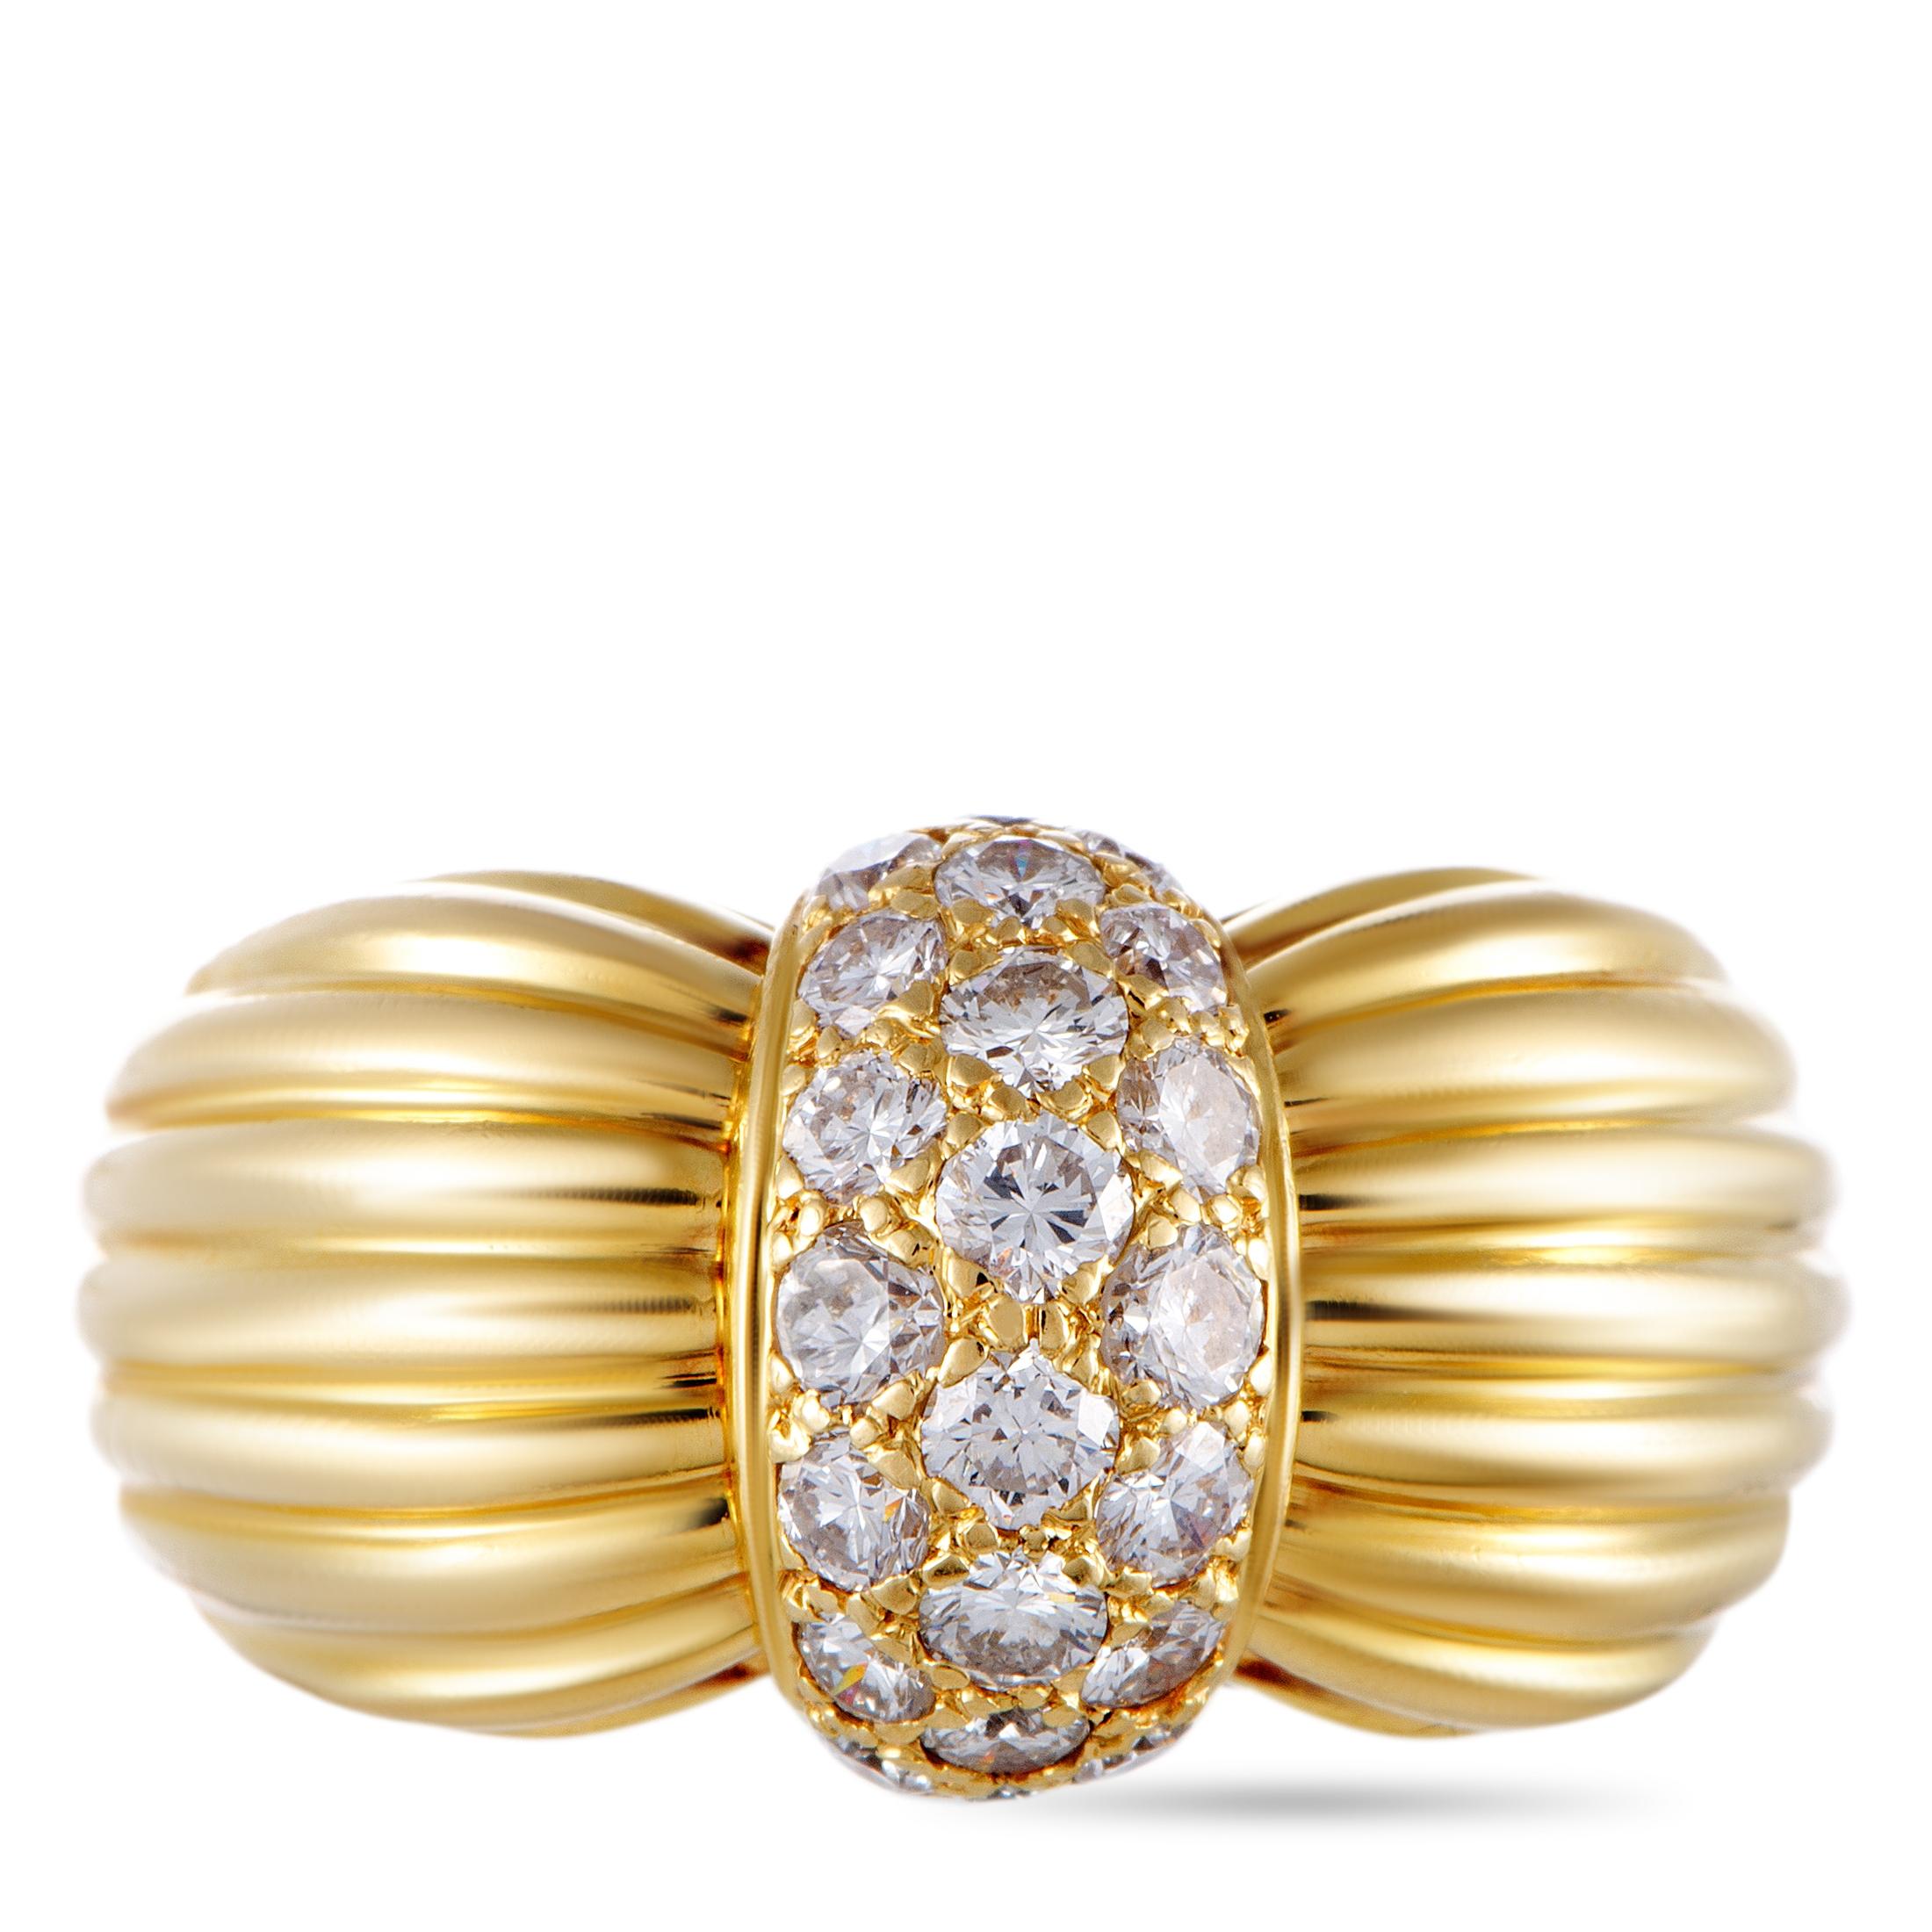 O.J.Perrin 18 Karat Yellow Gold Diamond Pave Band Ring 2